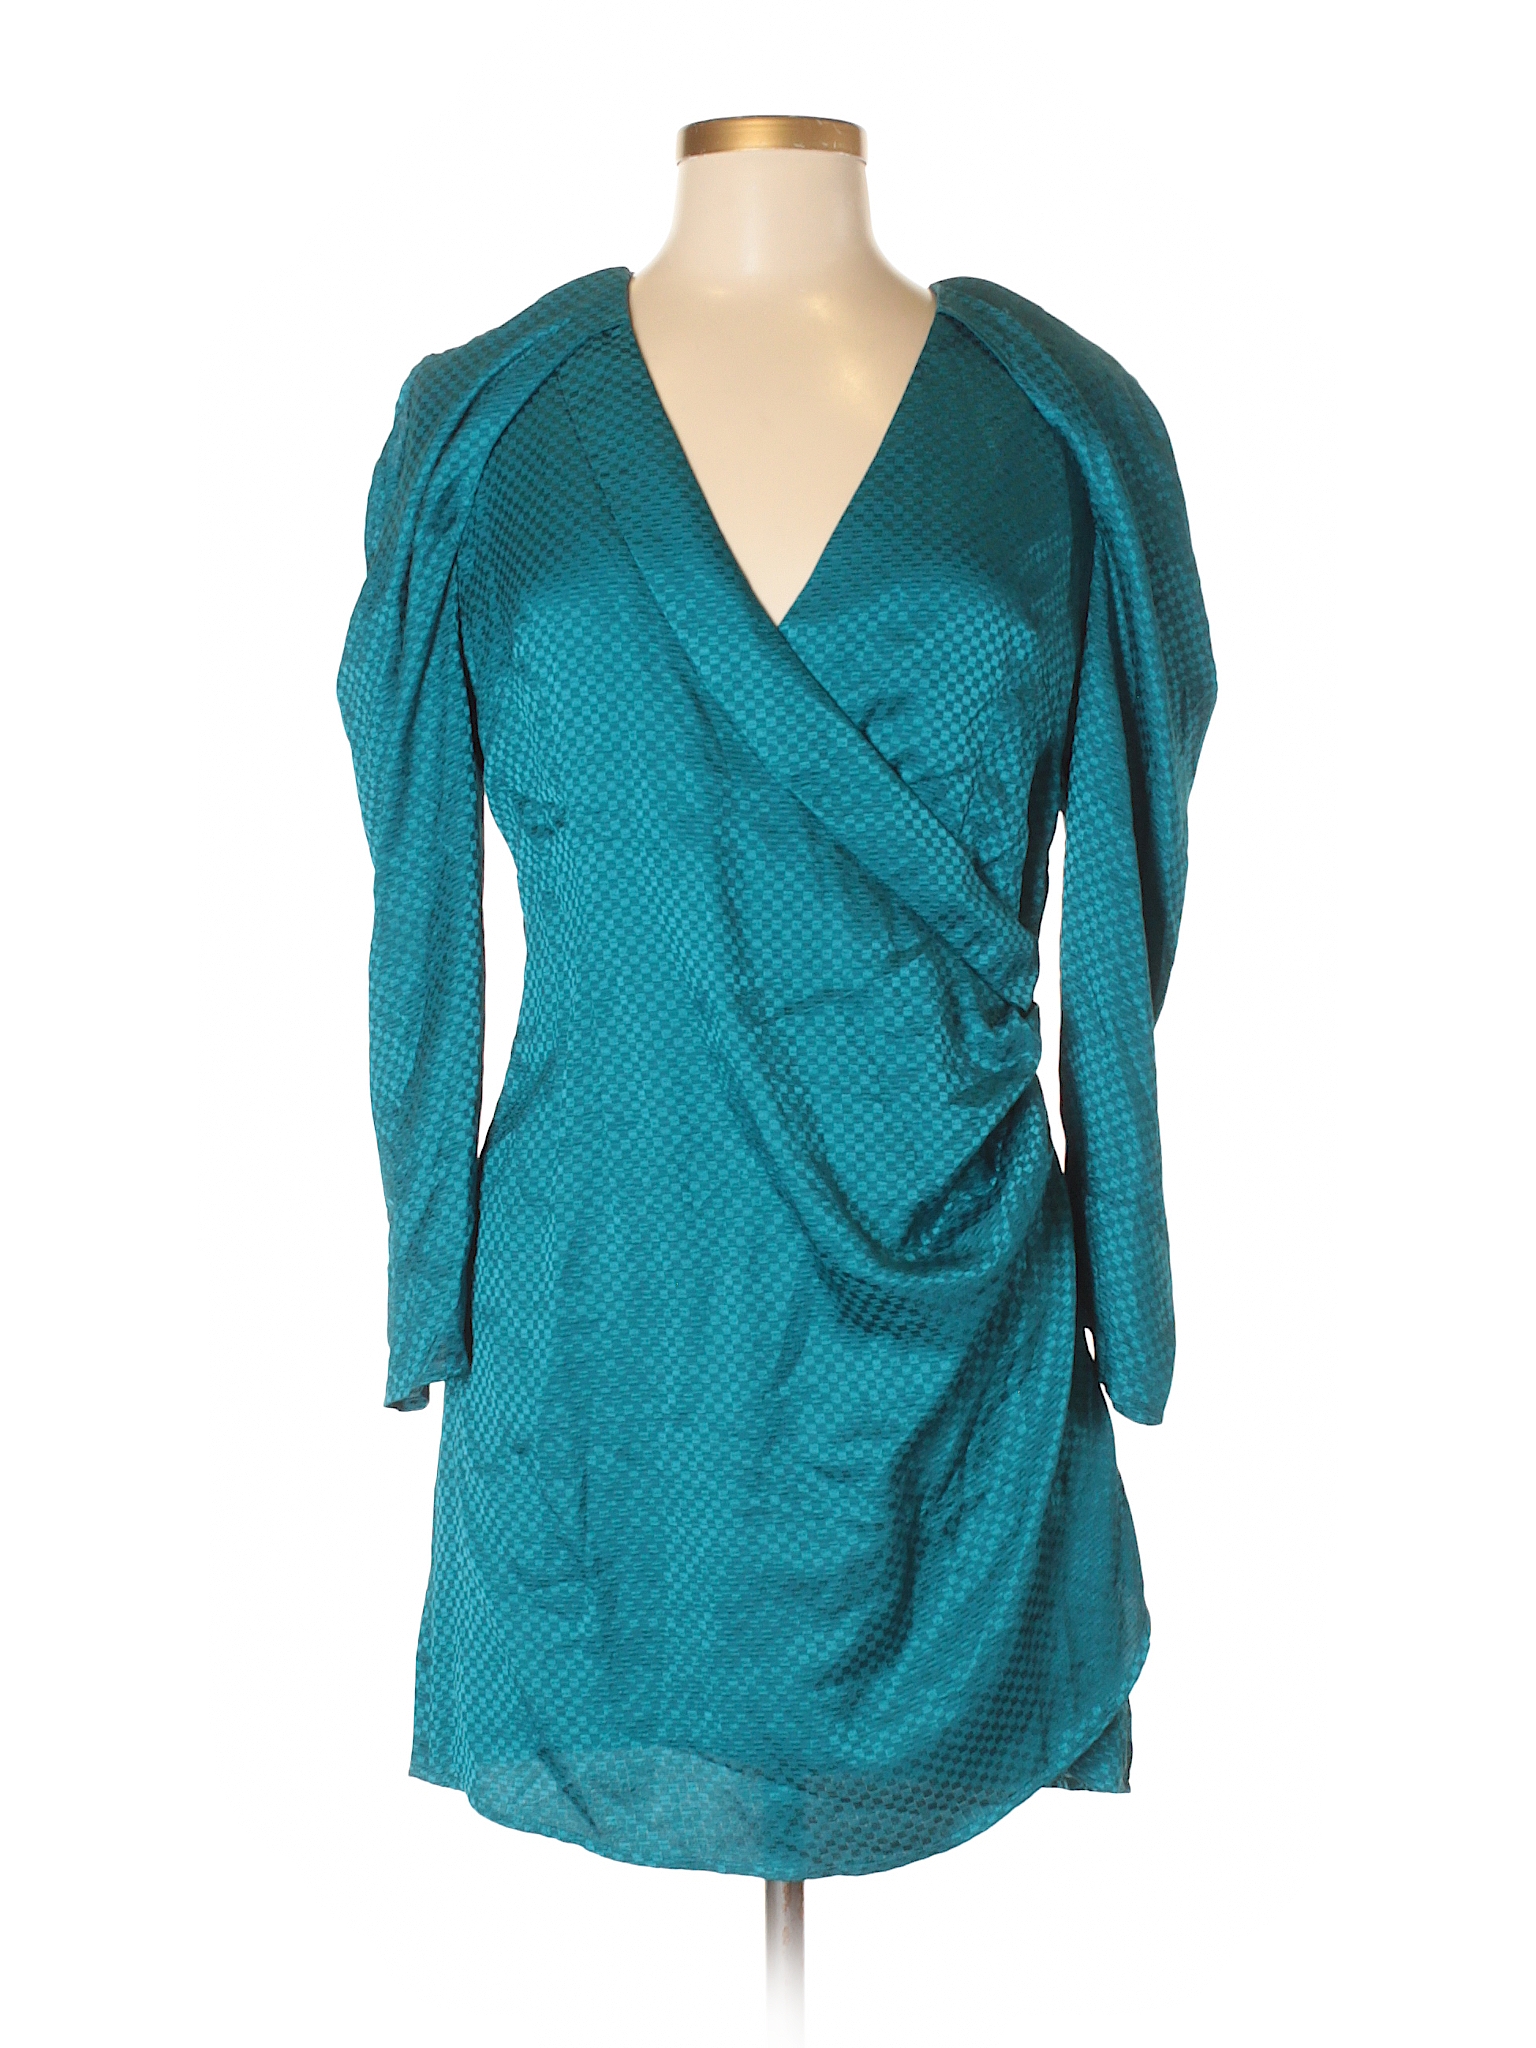 Max Mara 100% Silk Solid Blue Casual Dress Size 6 - 96% off | thredUP